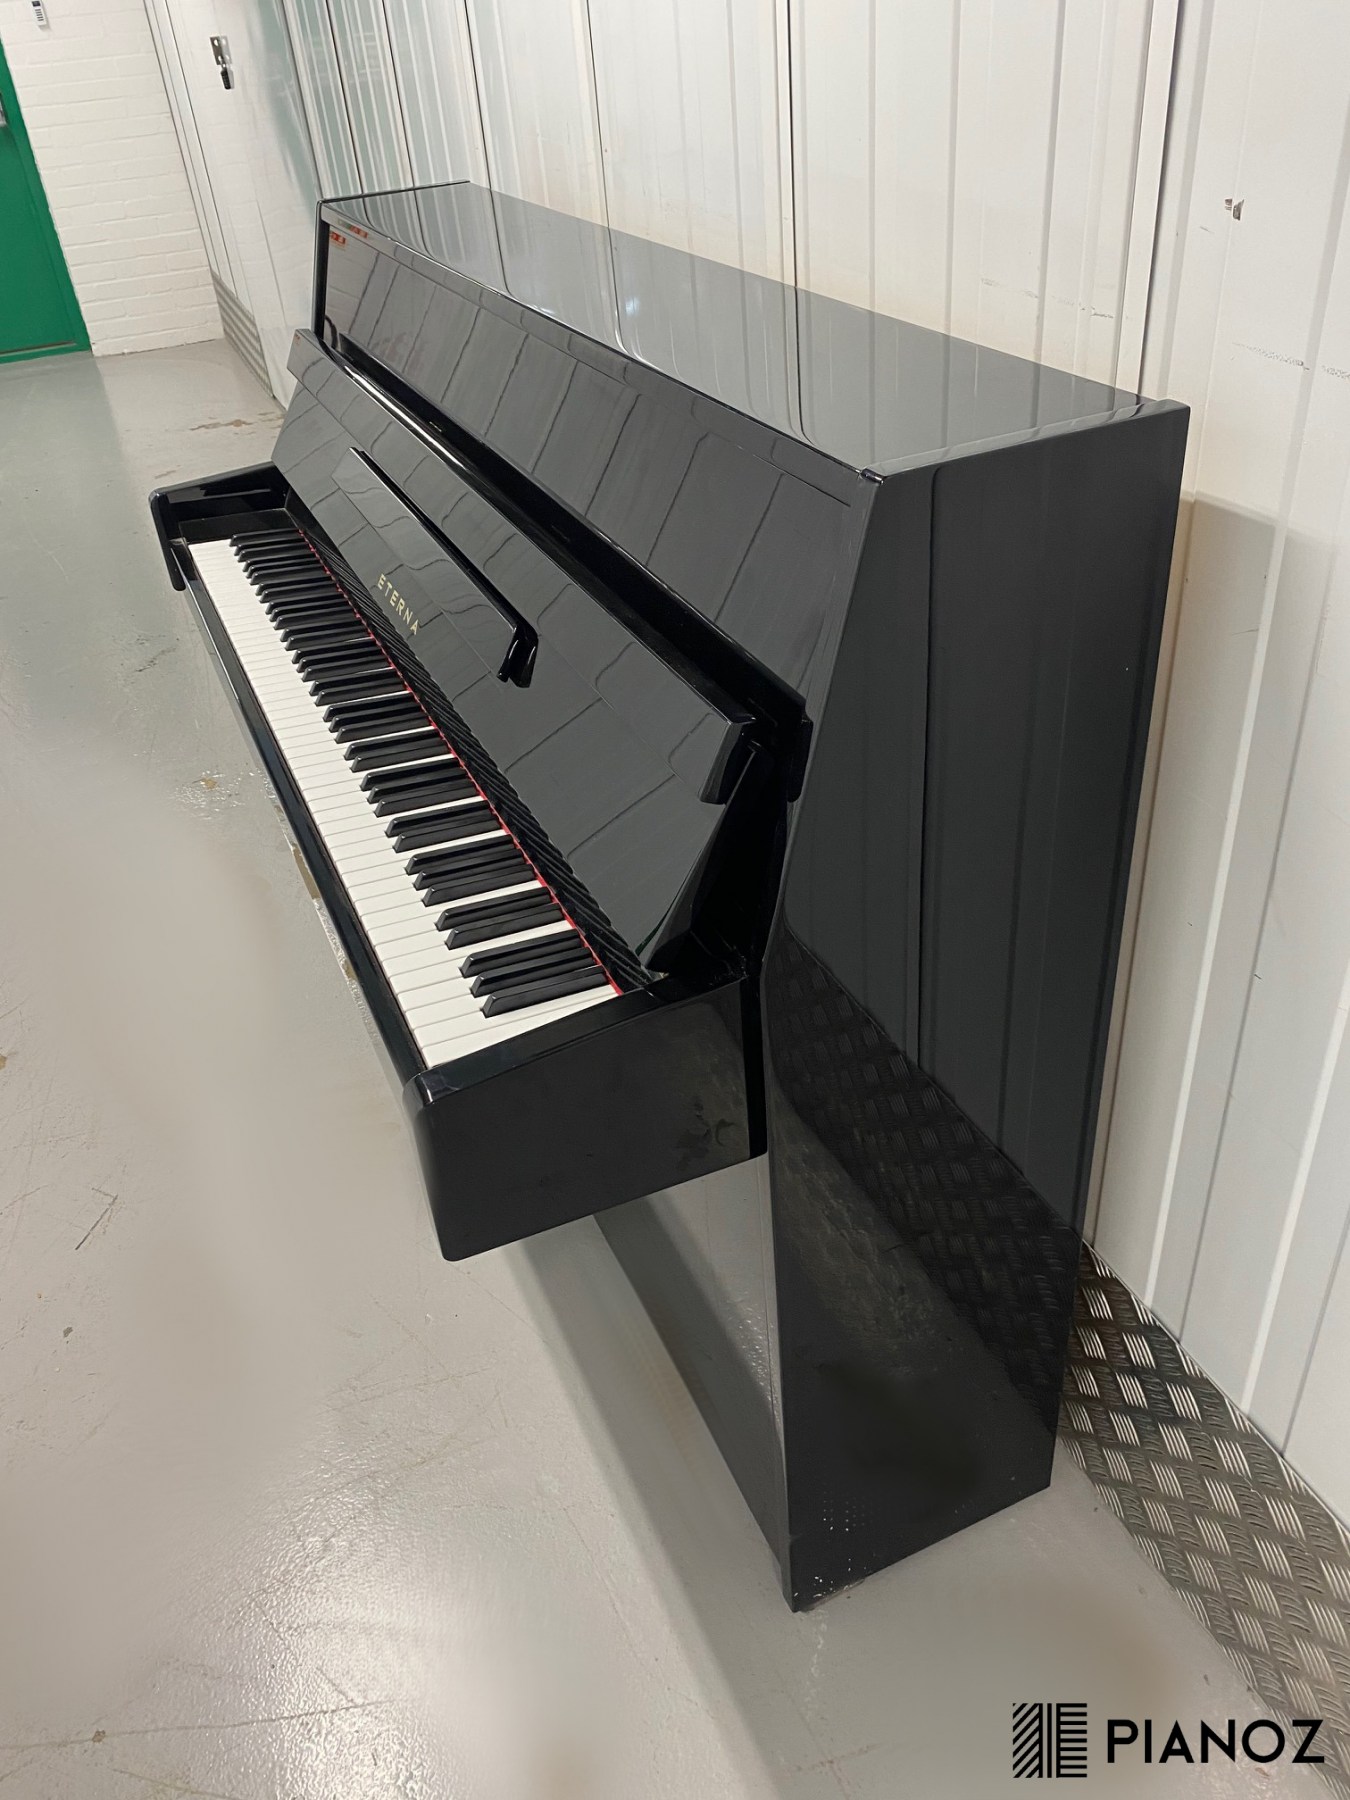 Yamaha Eterna Upright Piano piano for sale in UK